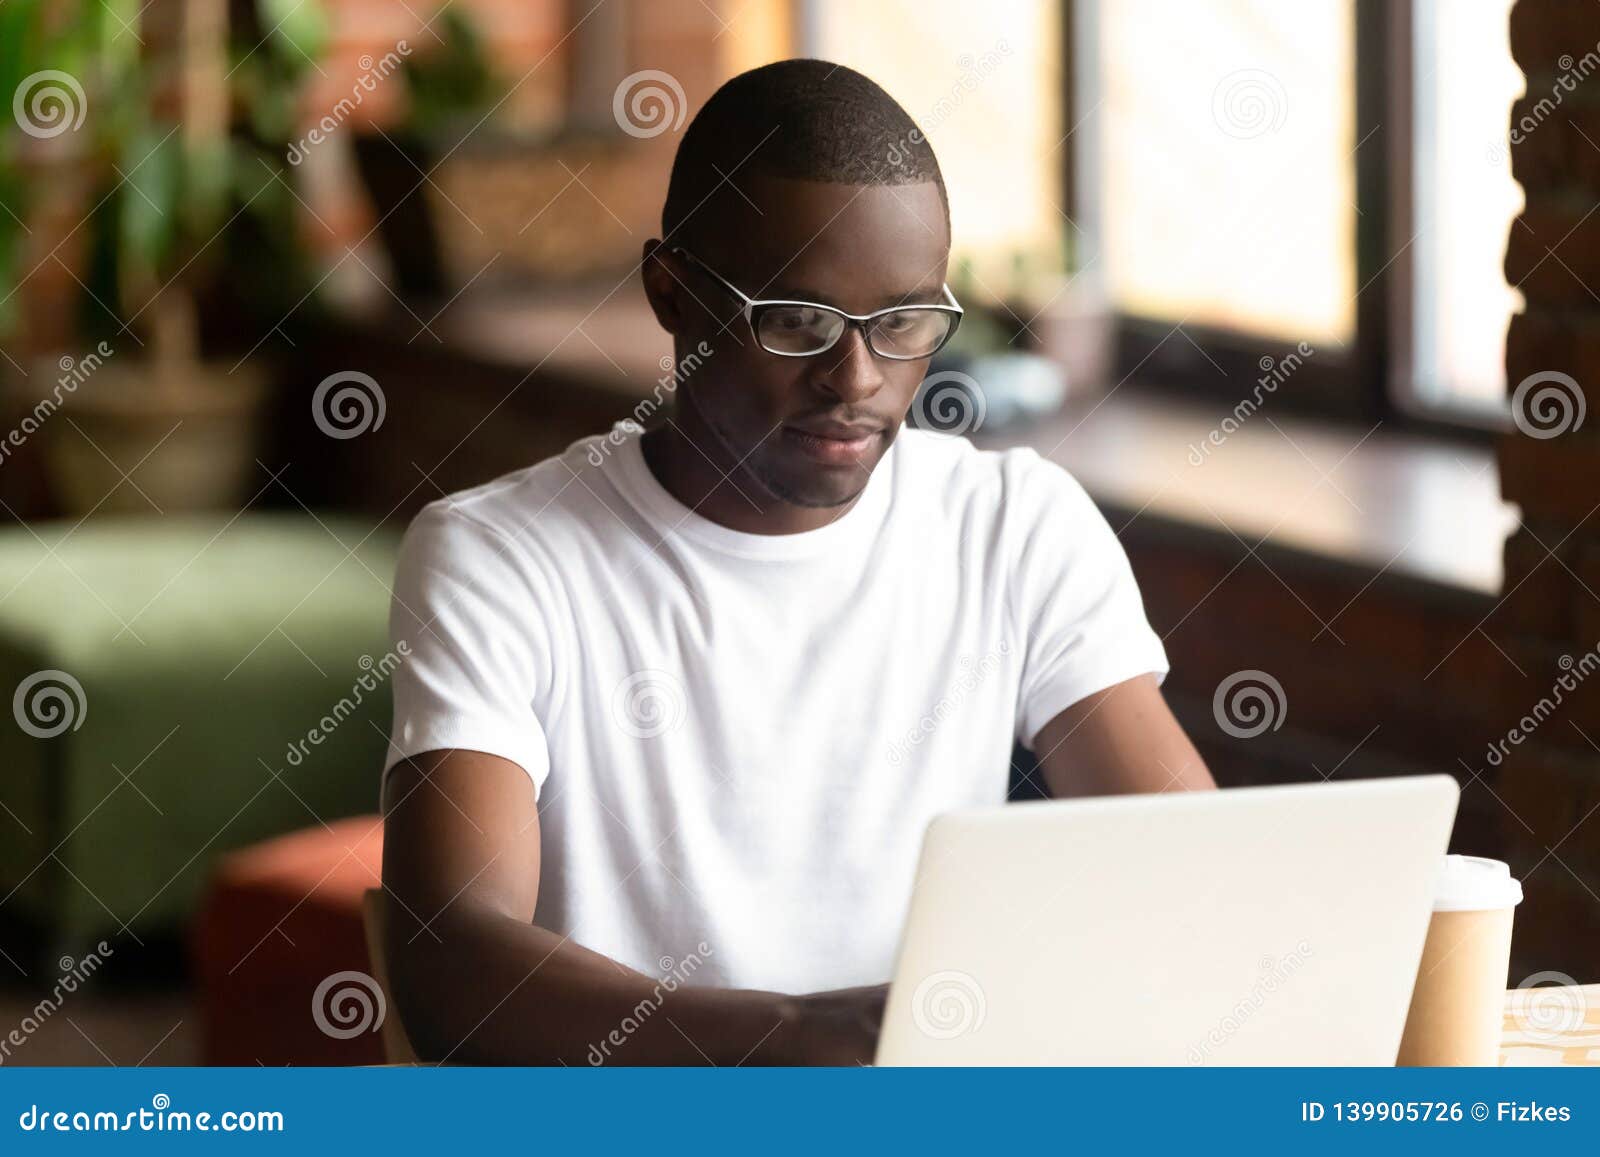 focused black millennial guy working on computer